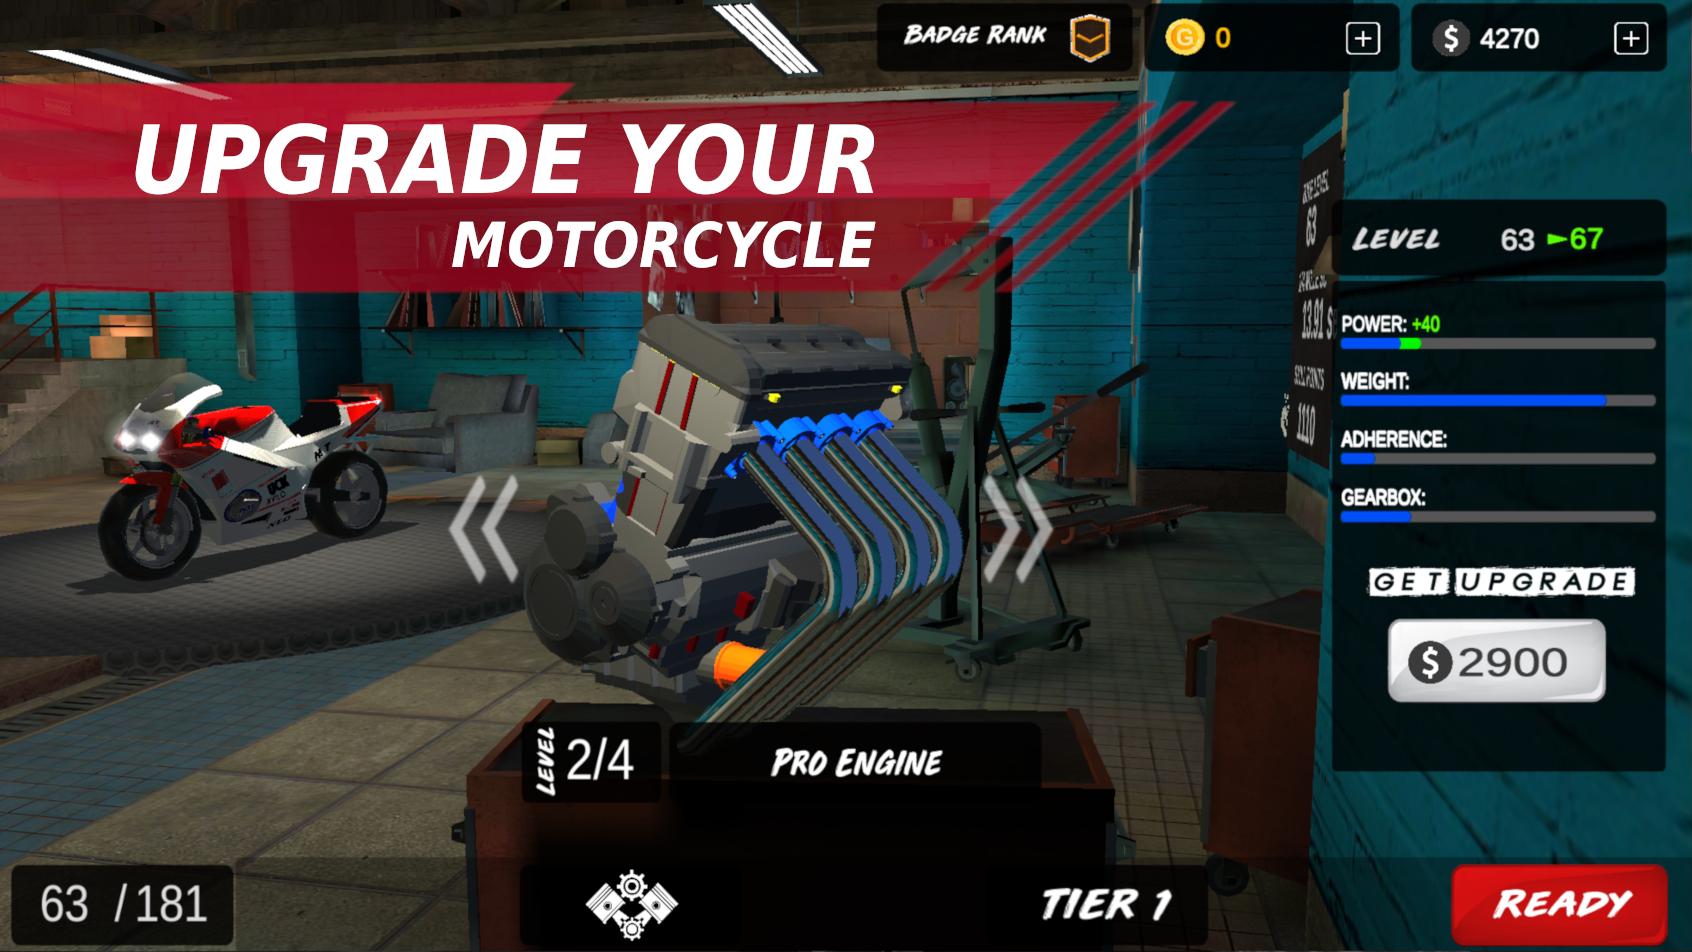 Rebel Gears Drag Bike Racing / CSR Race Moto Game 1.3.2 Screenshot 14